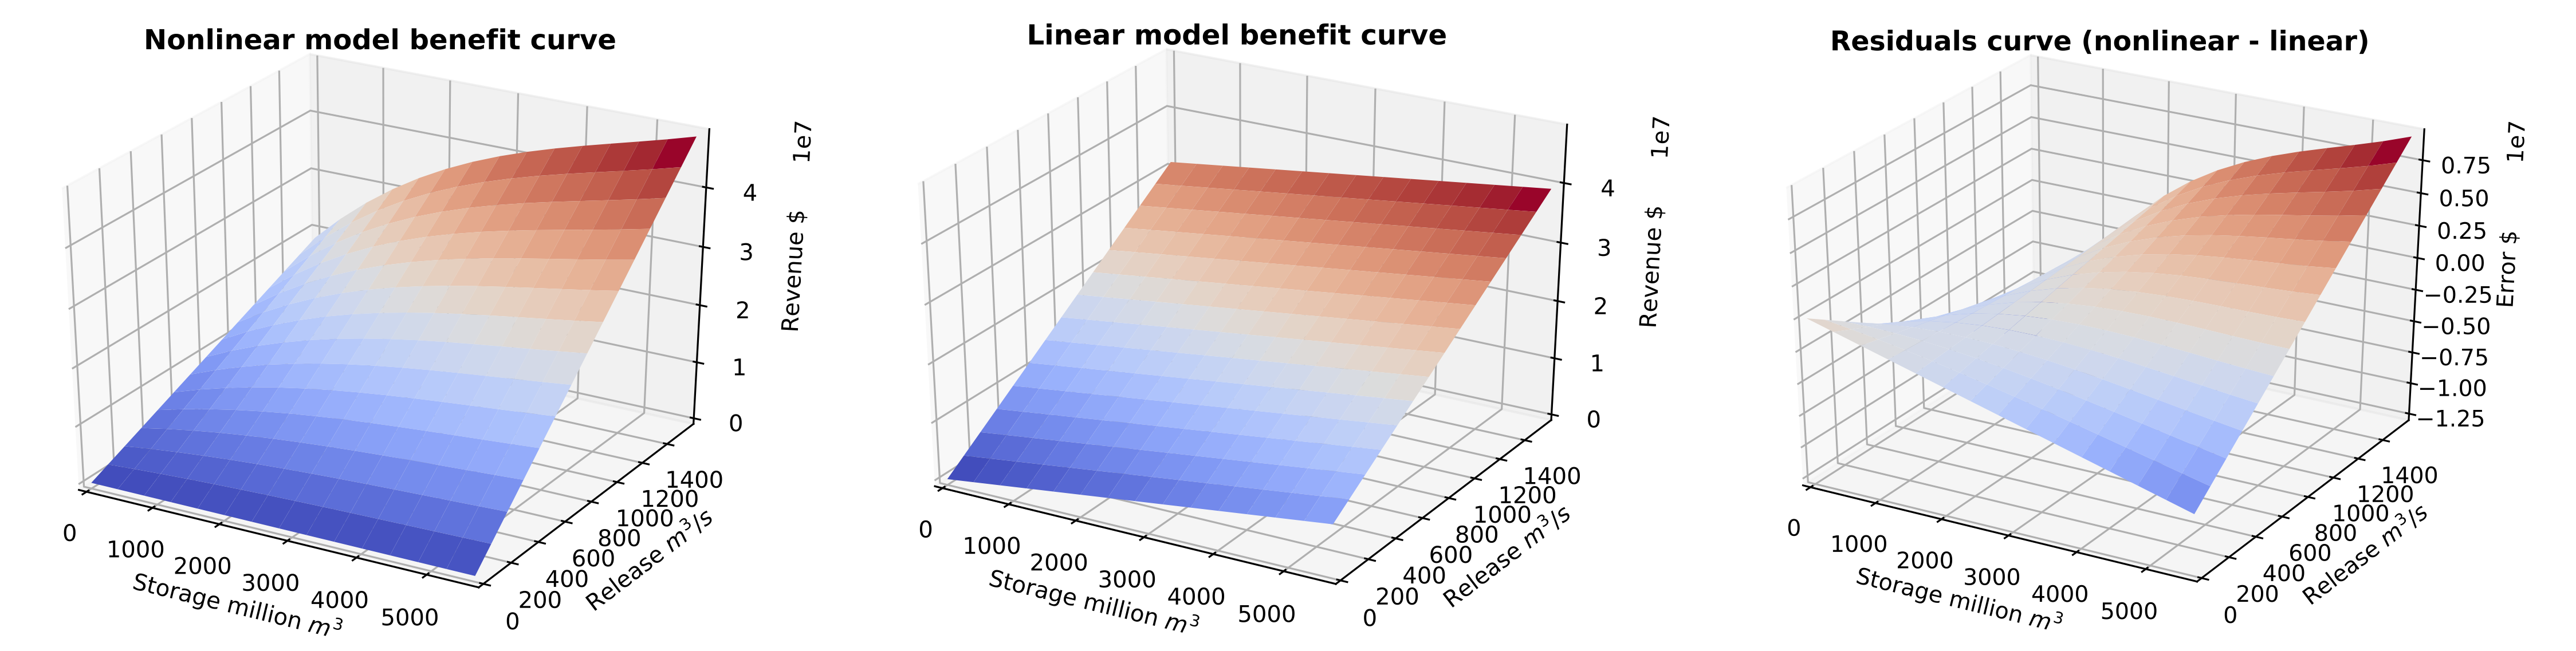 benefit_curves